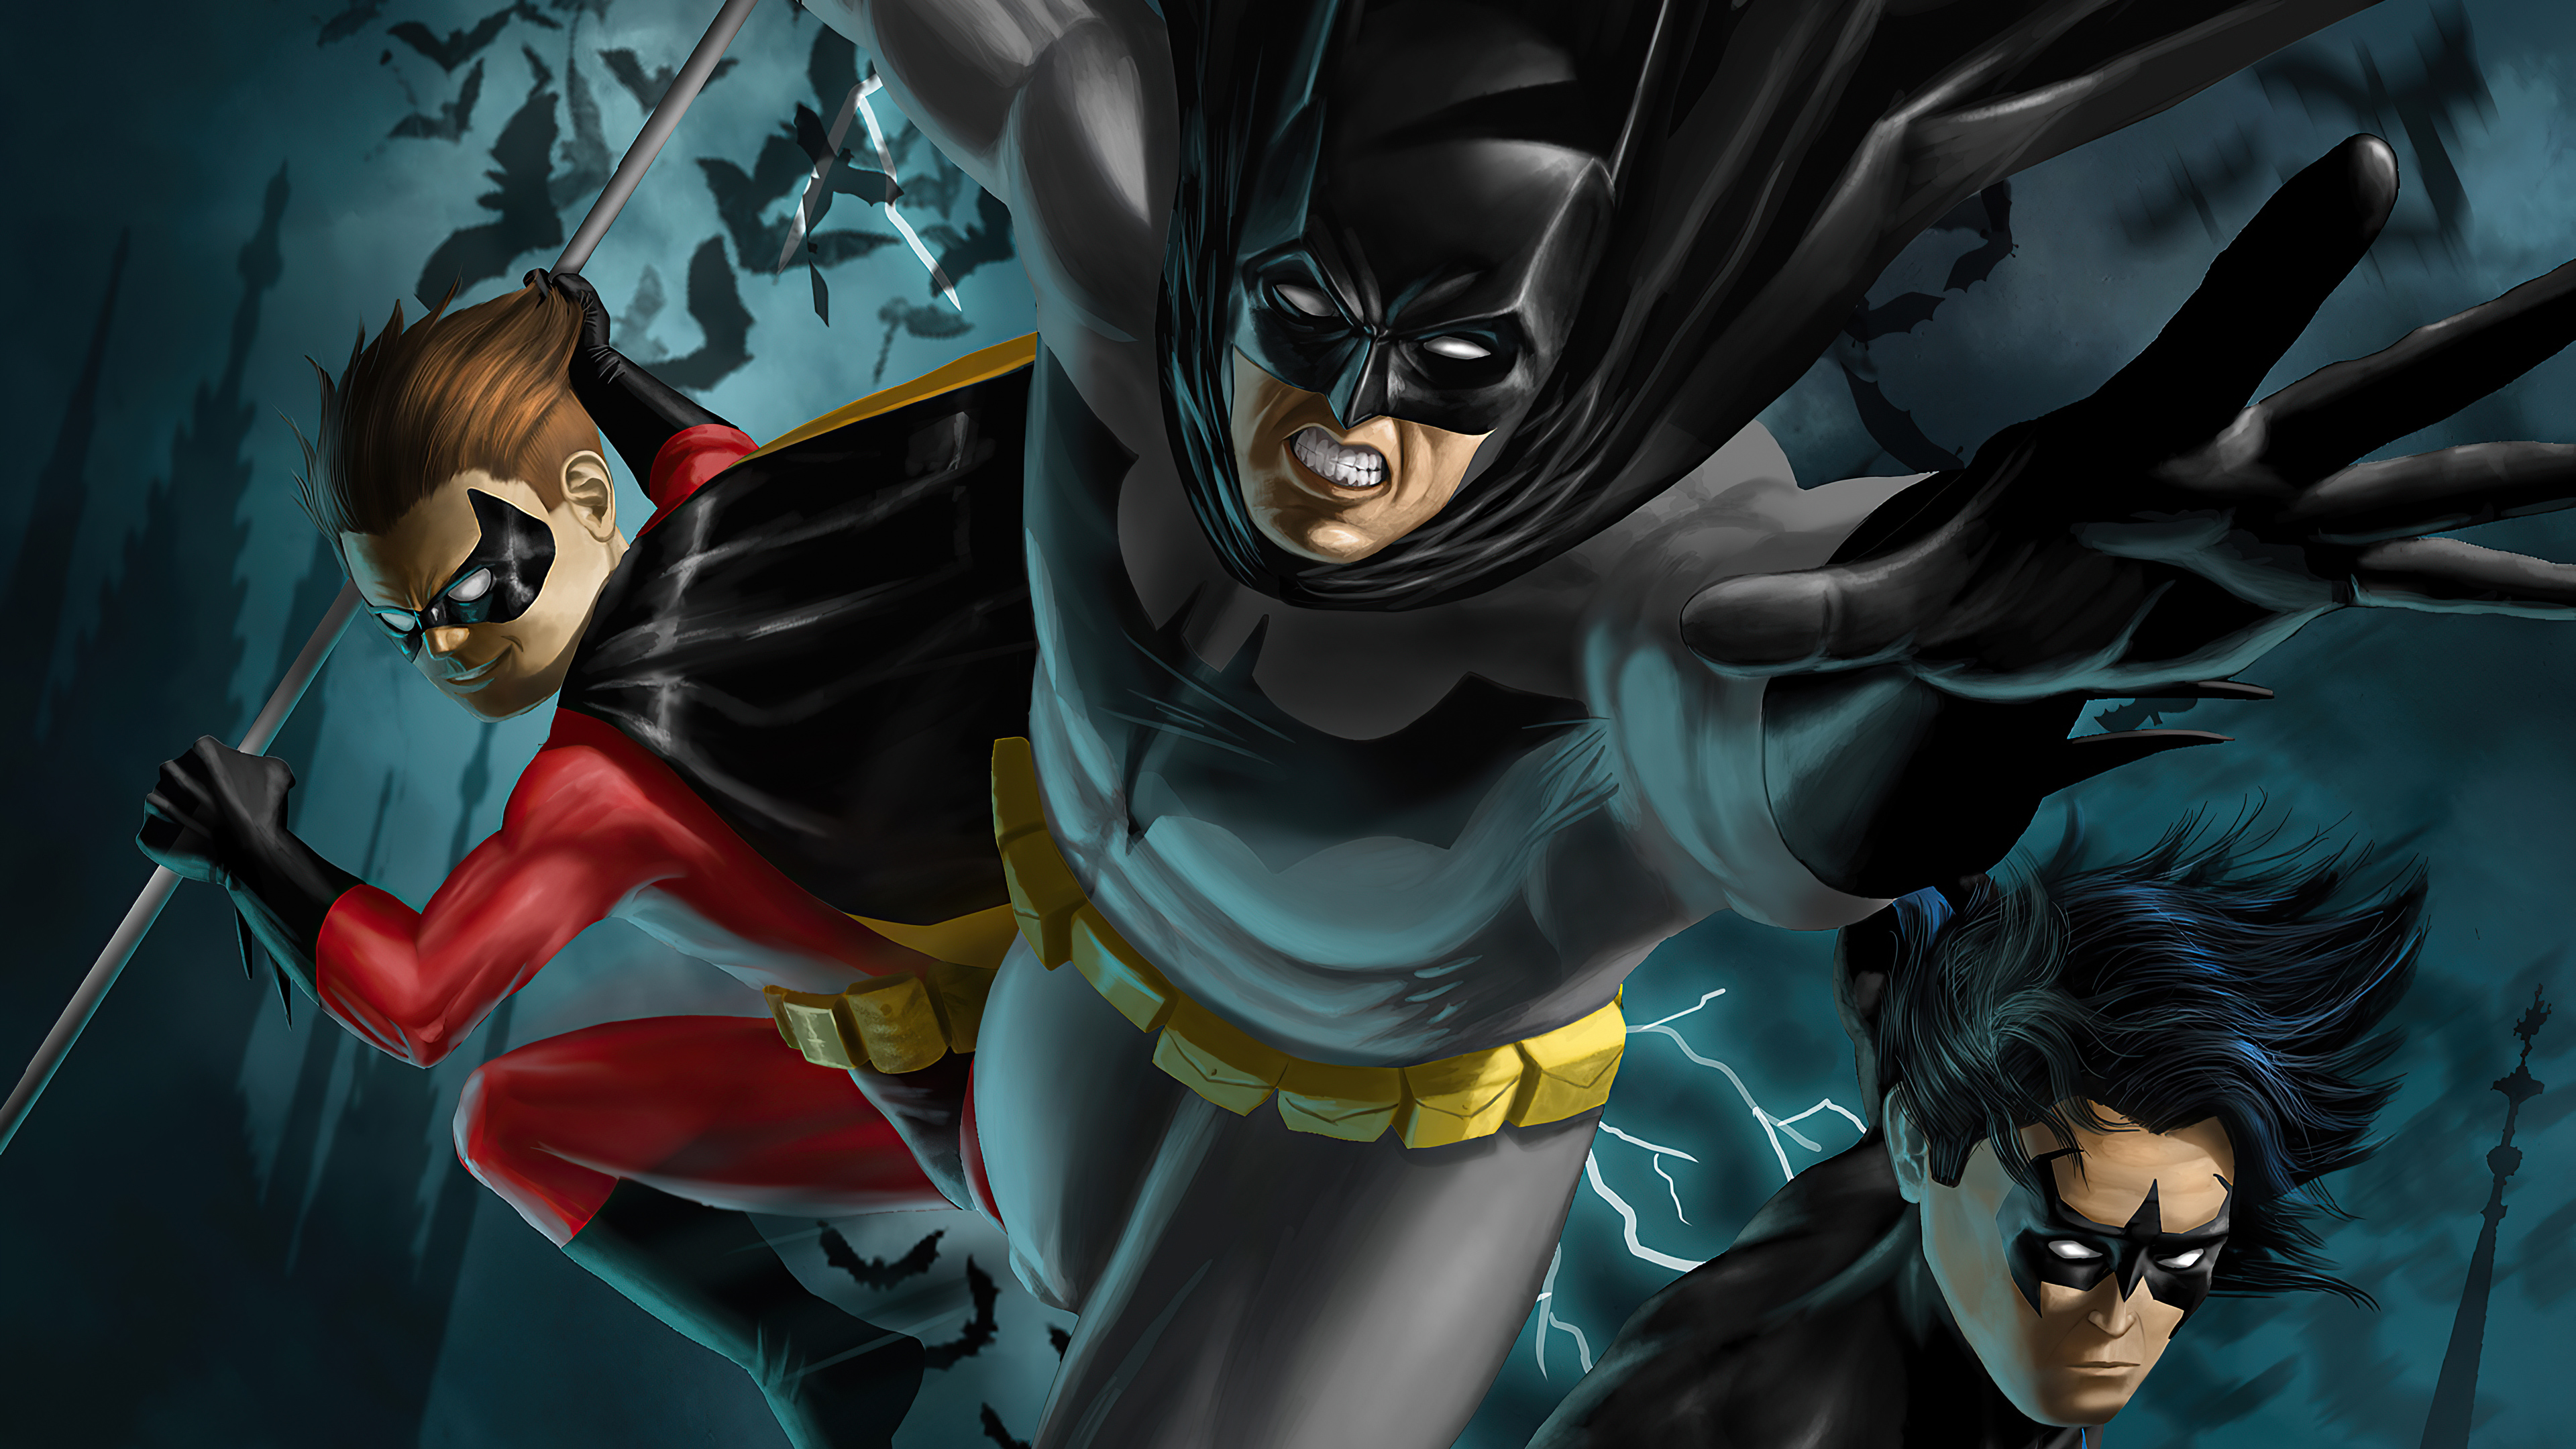 Descarga gratuita de fondo de pantalla para móvil de Historietas, The Batman, Dc Comics, Ala Noche, Robin (Dc Cómics), Dick Grayson, Damián Wayne.